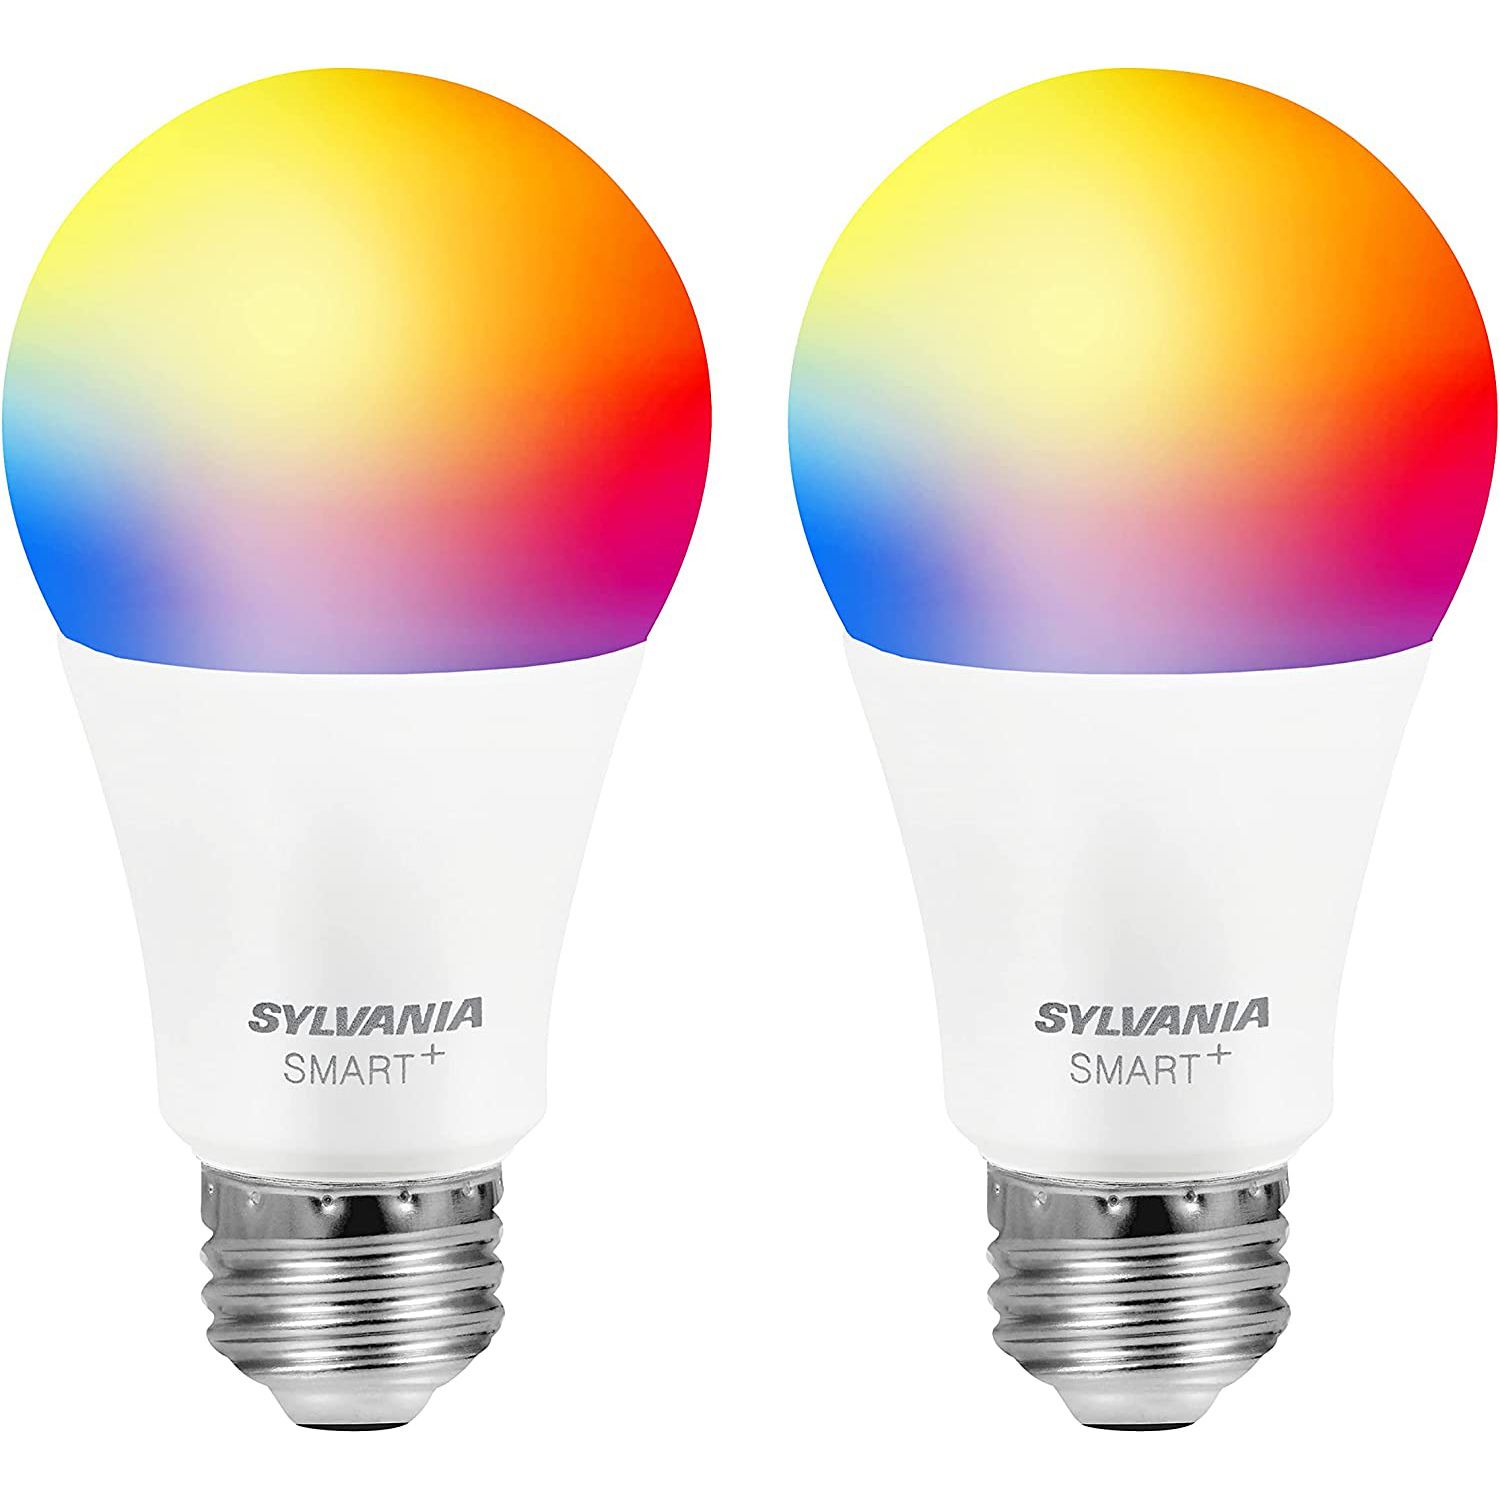 sylvania-smart-bulbs-mesh-led-render-01